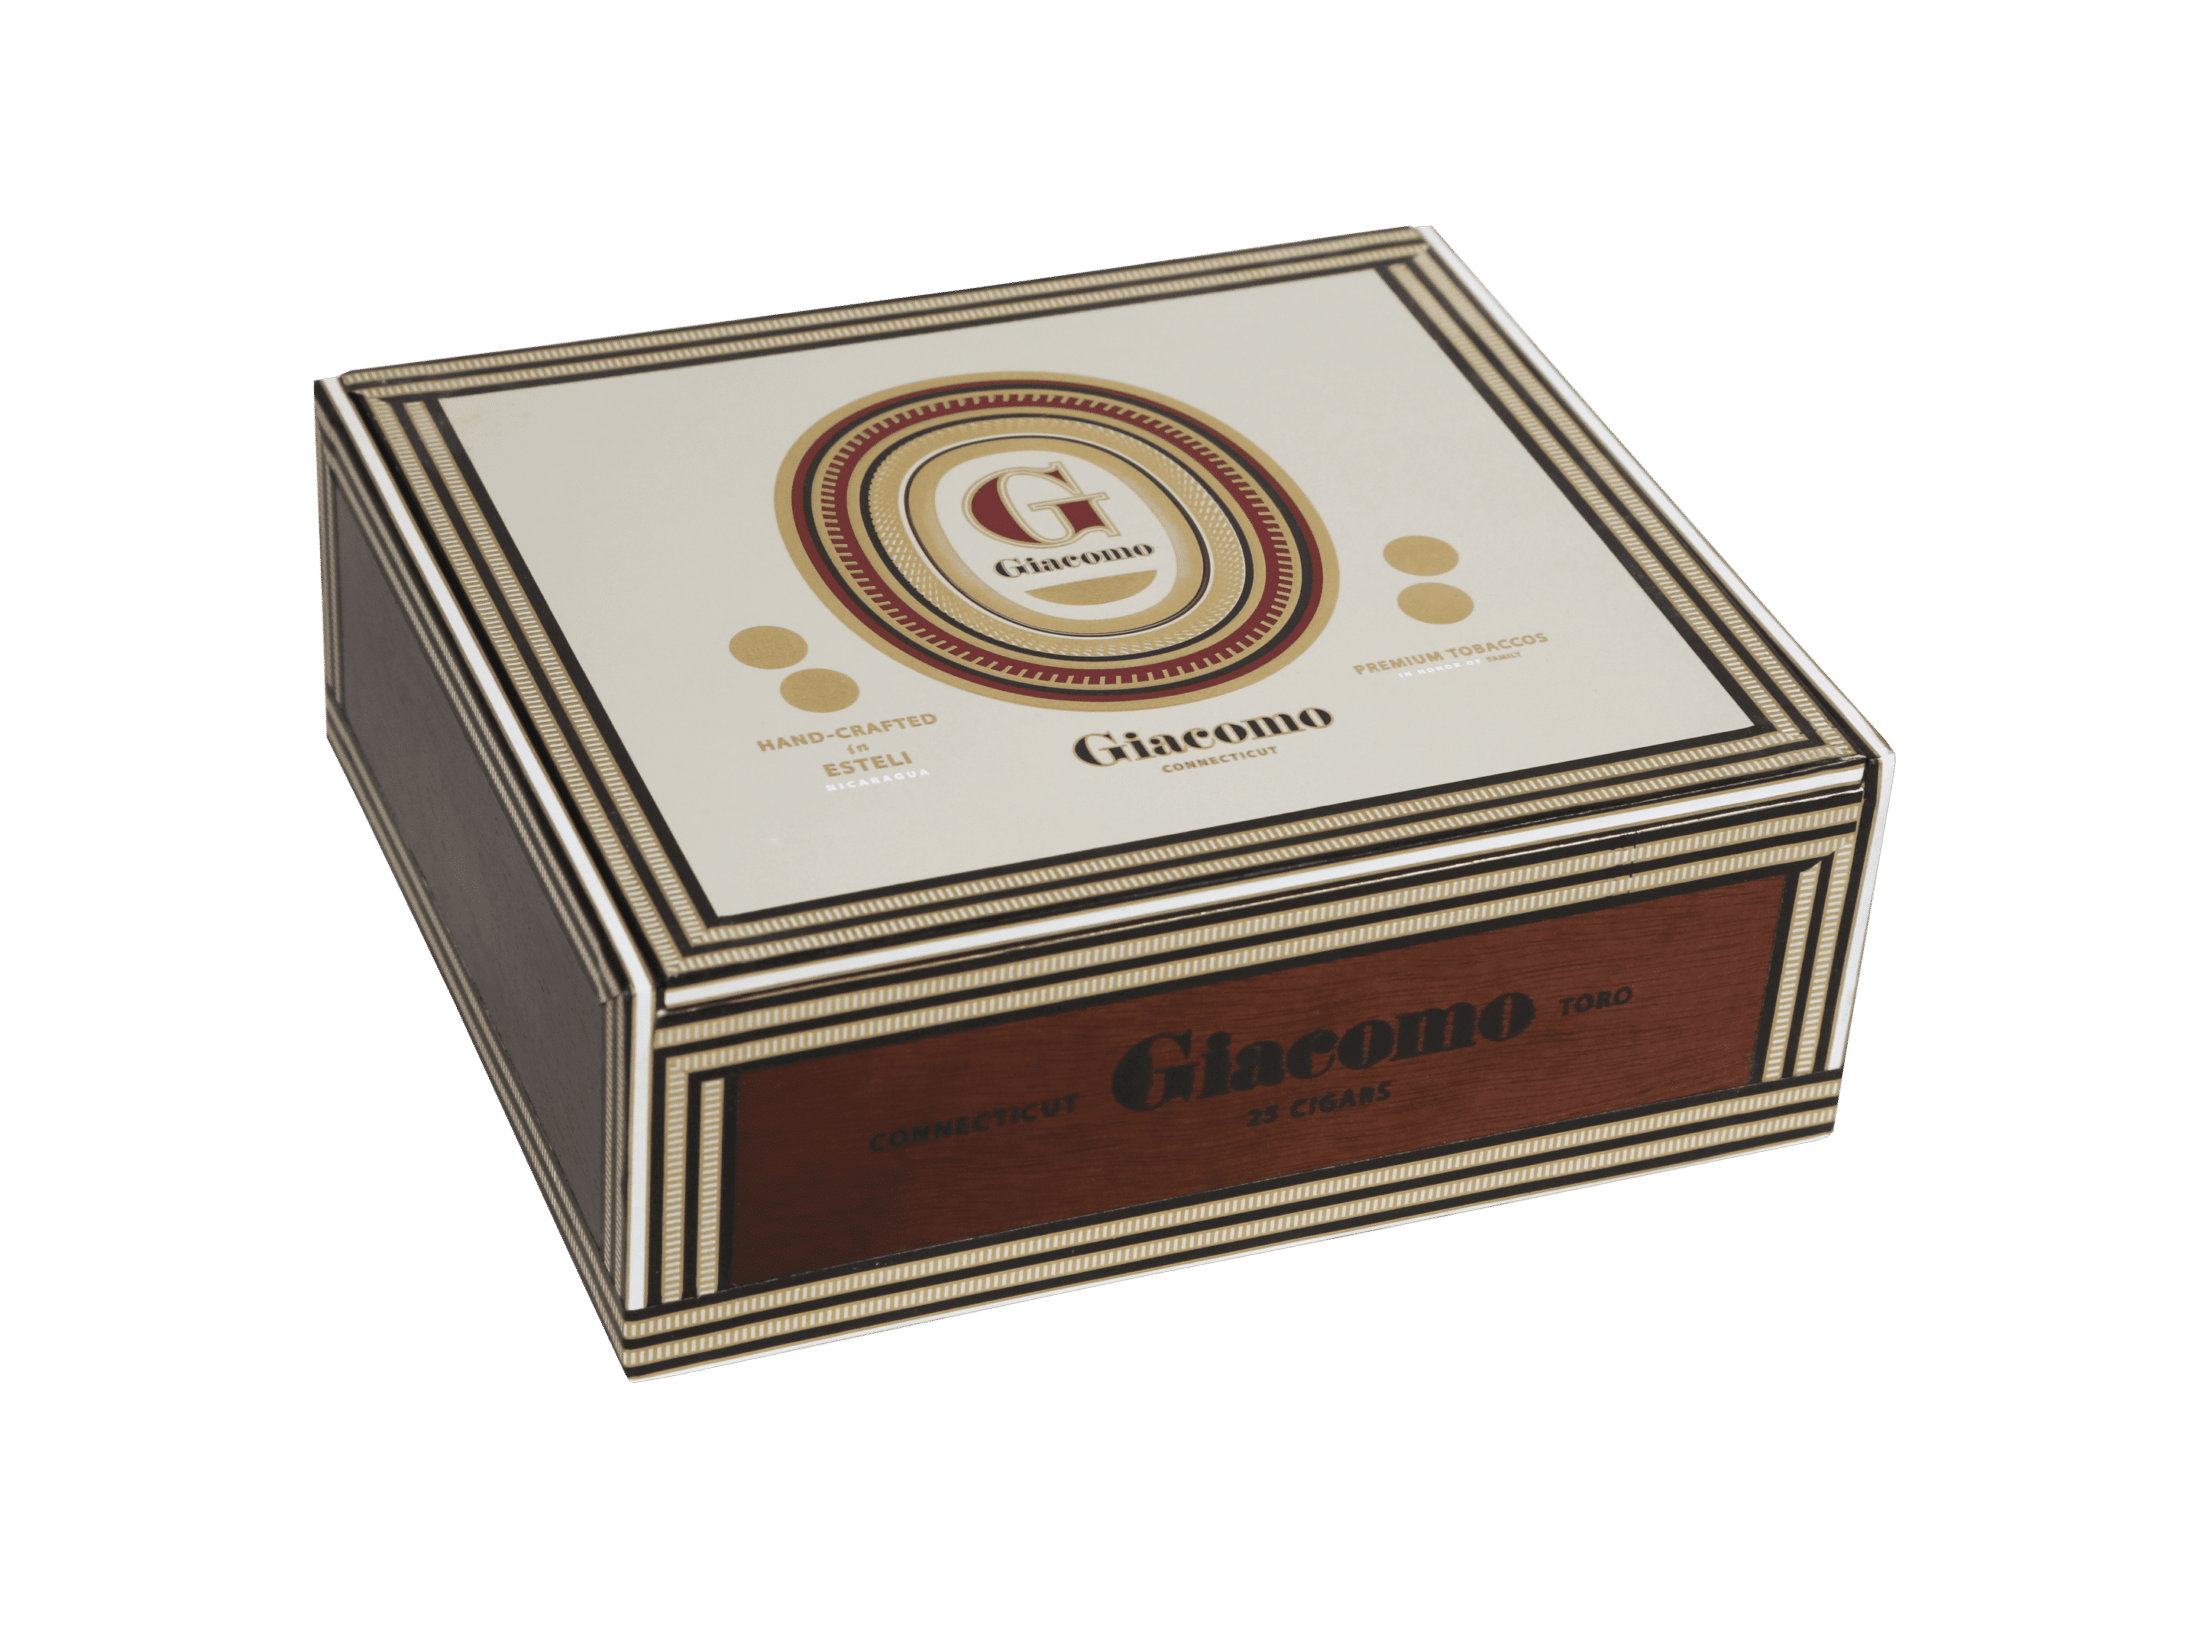 Closed box of Giacomo Connecticut Toro cigars